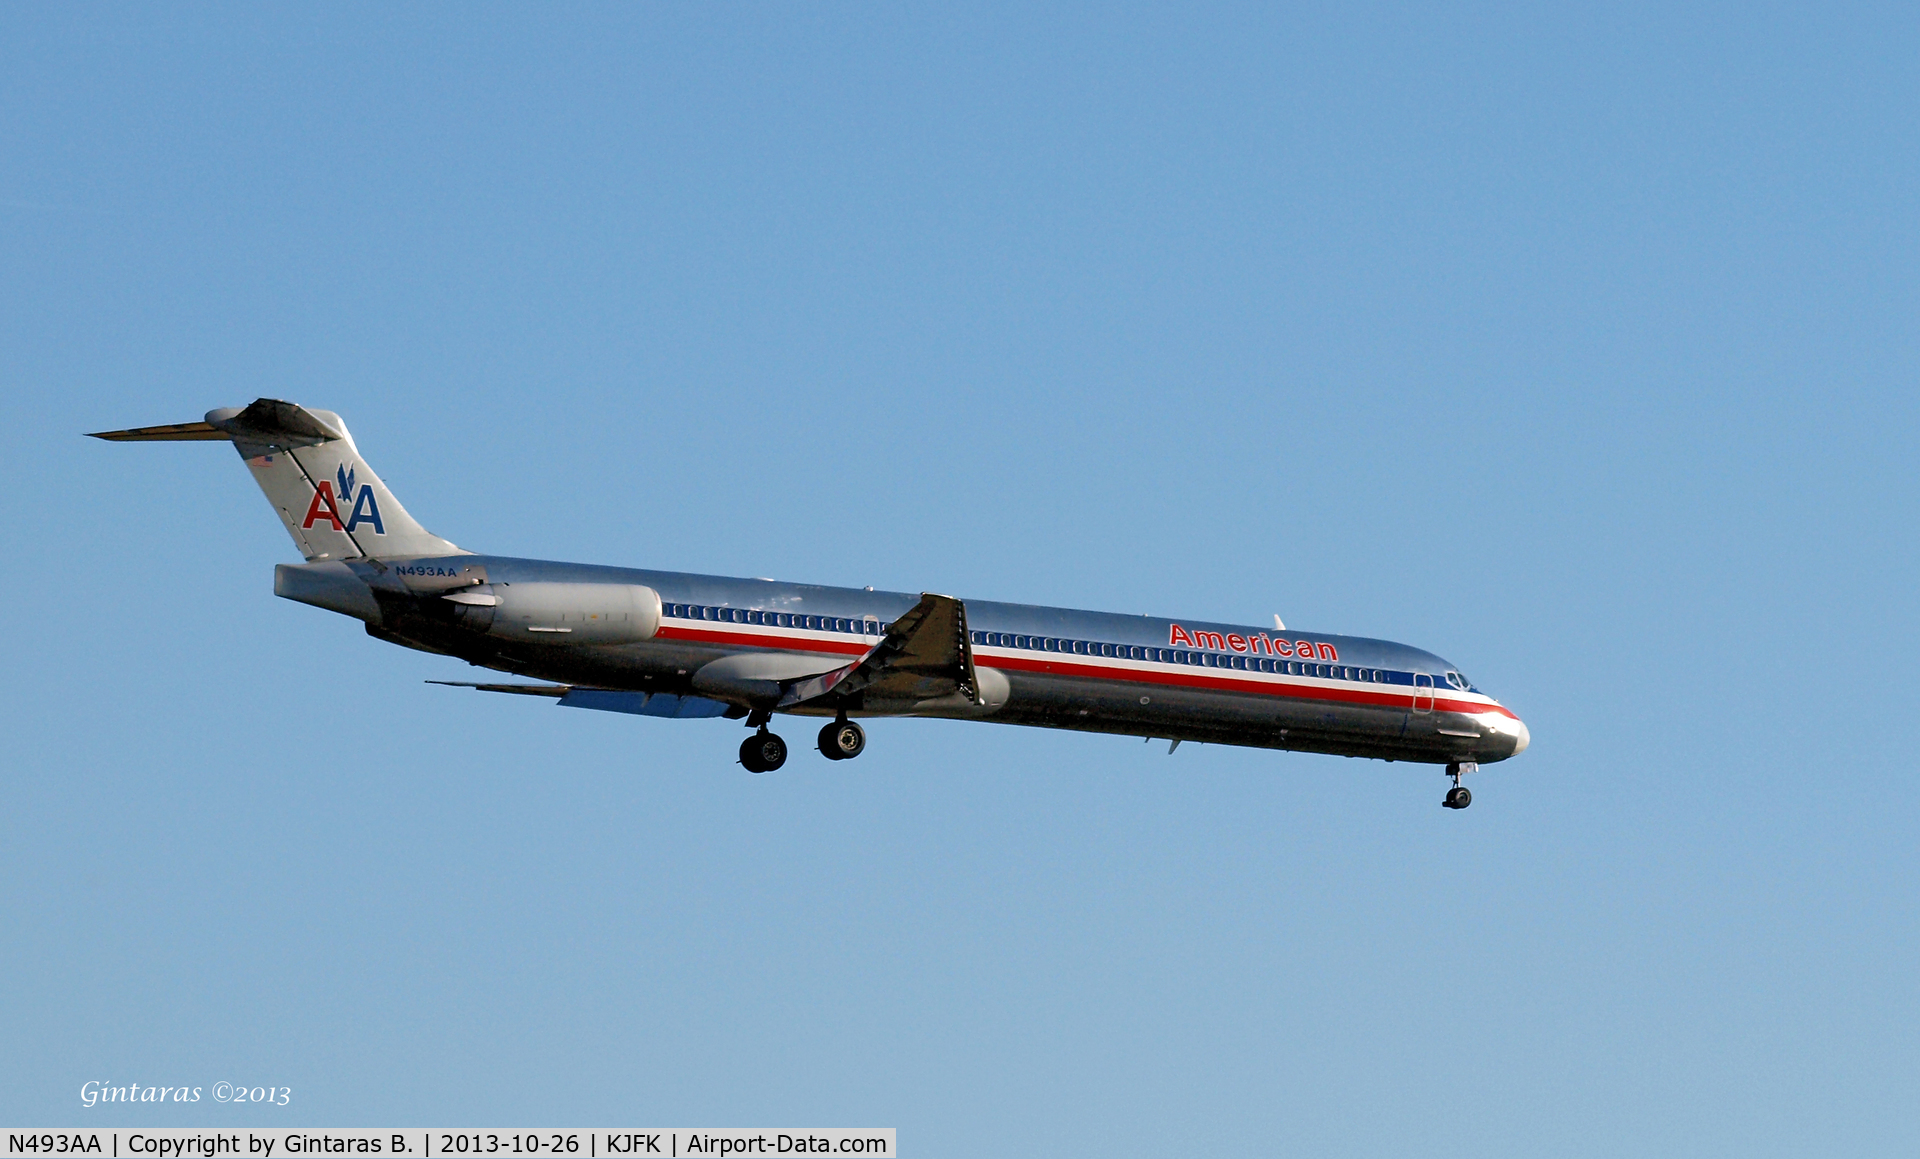 N493AA, 1989 McDonnell Douglas MD-82 (DC-9-82) C/N 49731, Going to a landing on 22L @ JFK